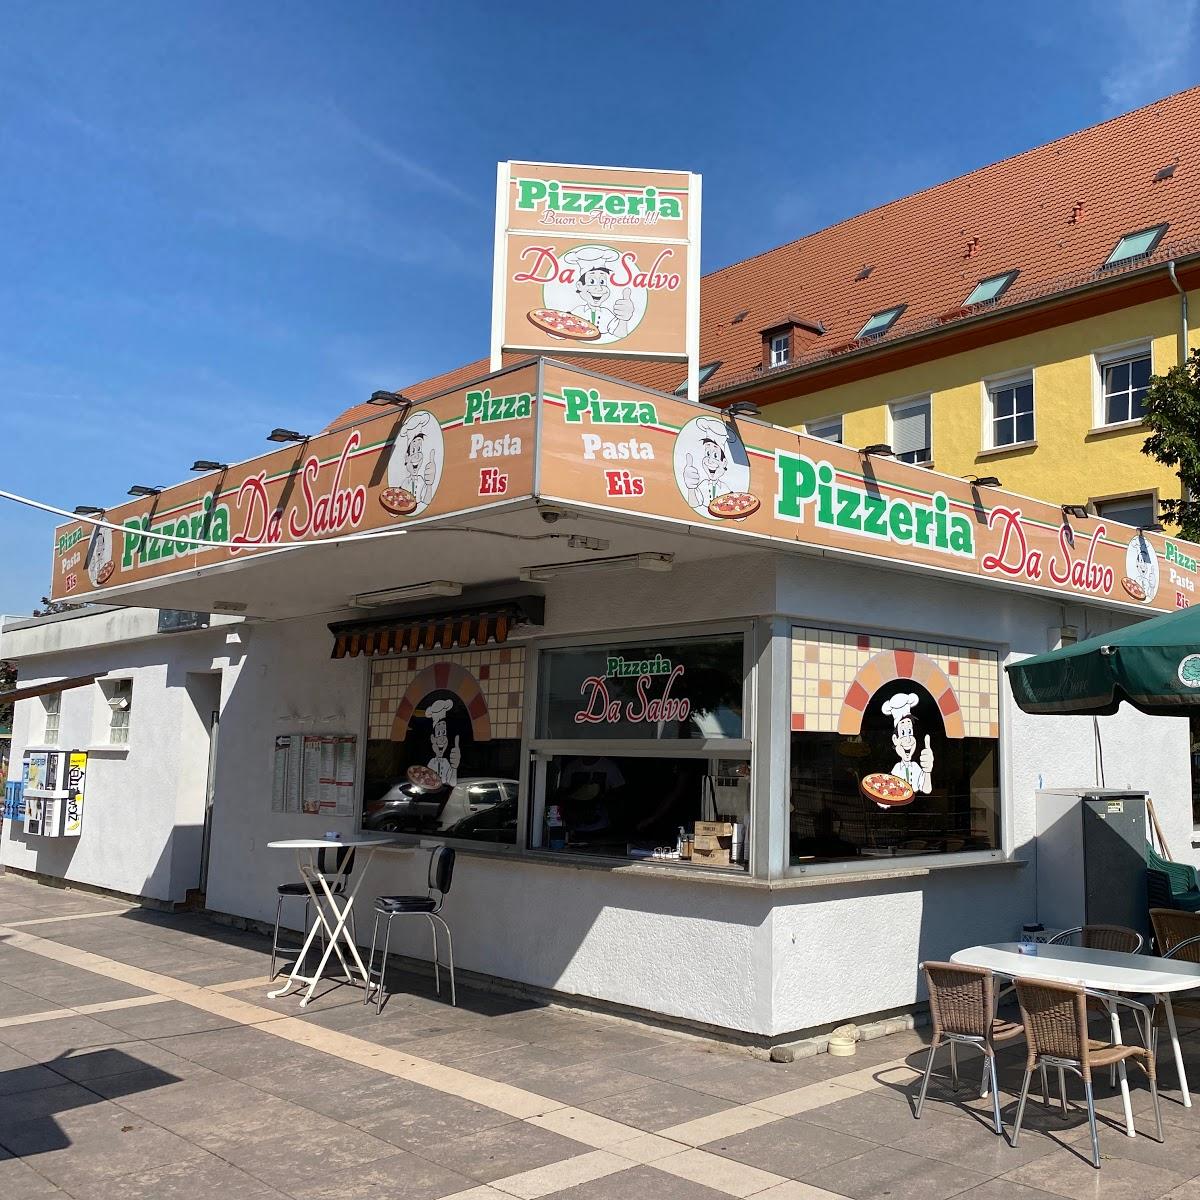 Restaurant "Pizzeria Da Salvo" in Mannheim